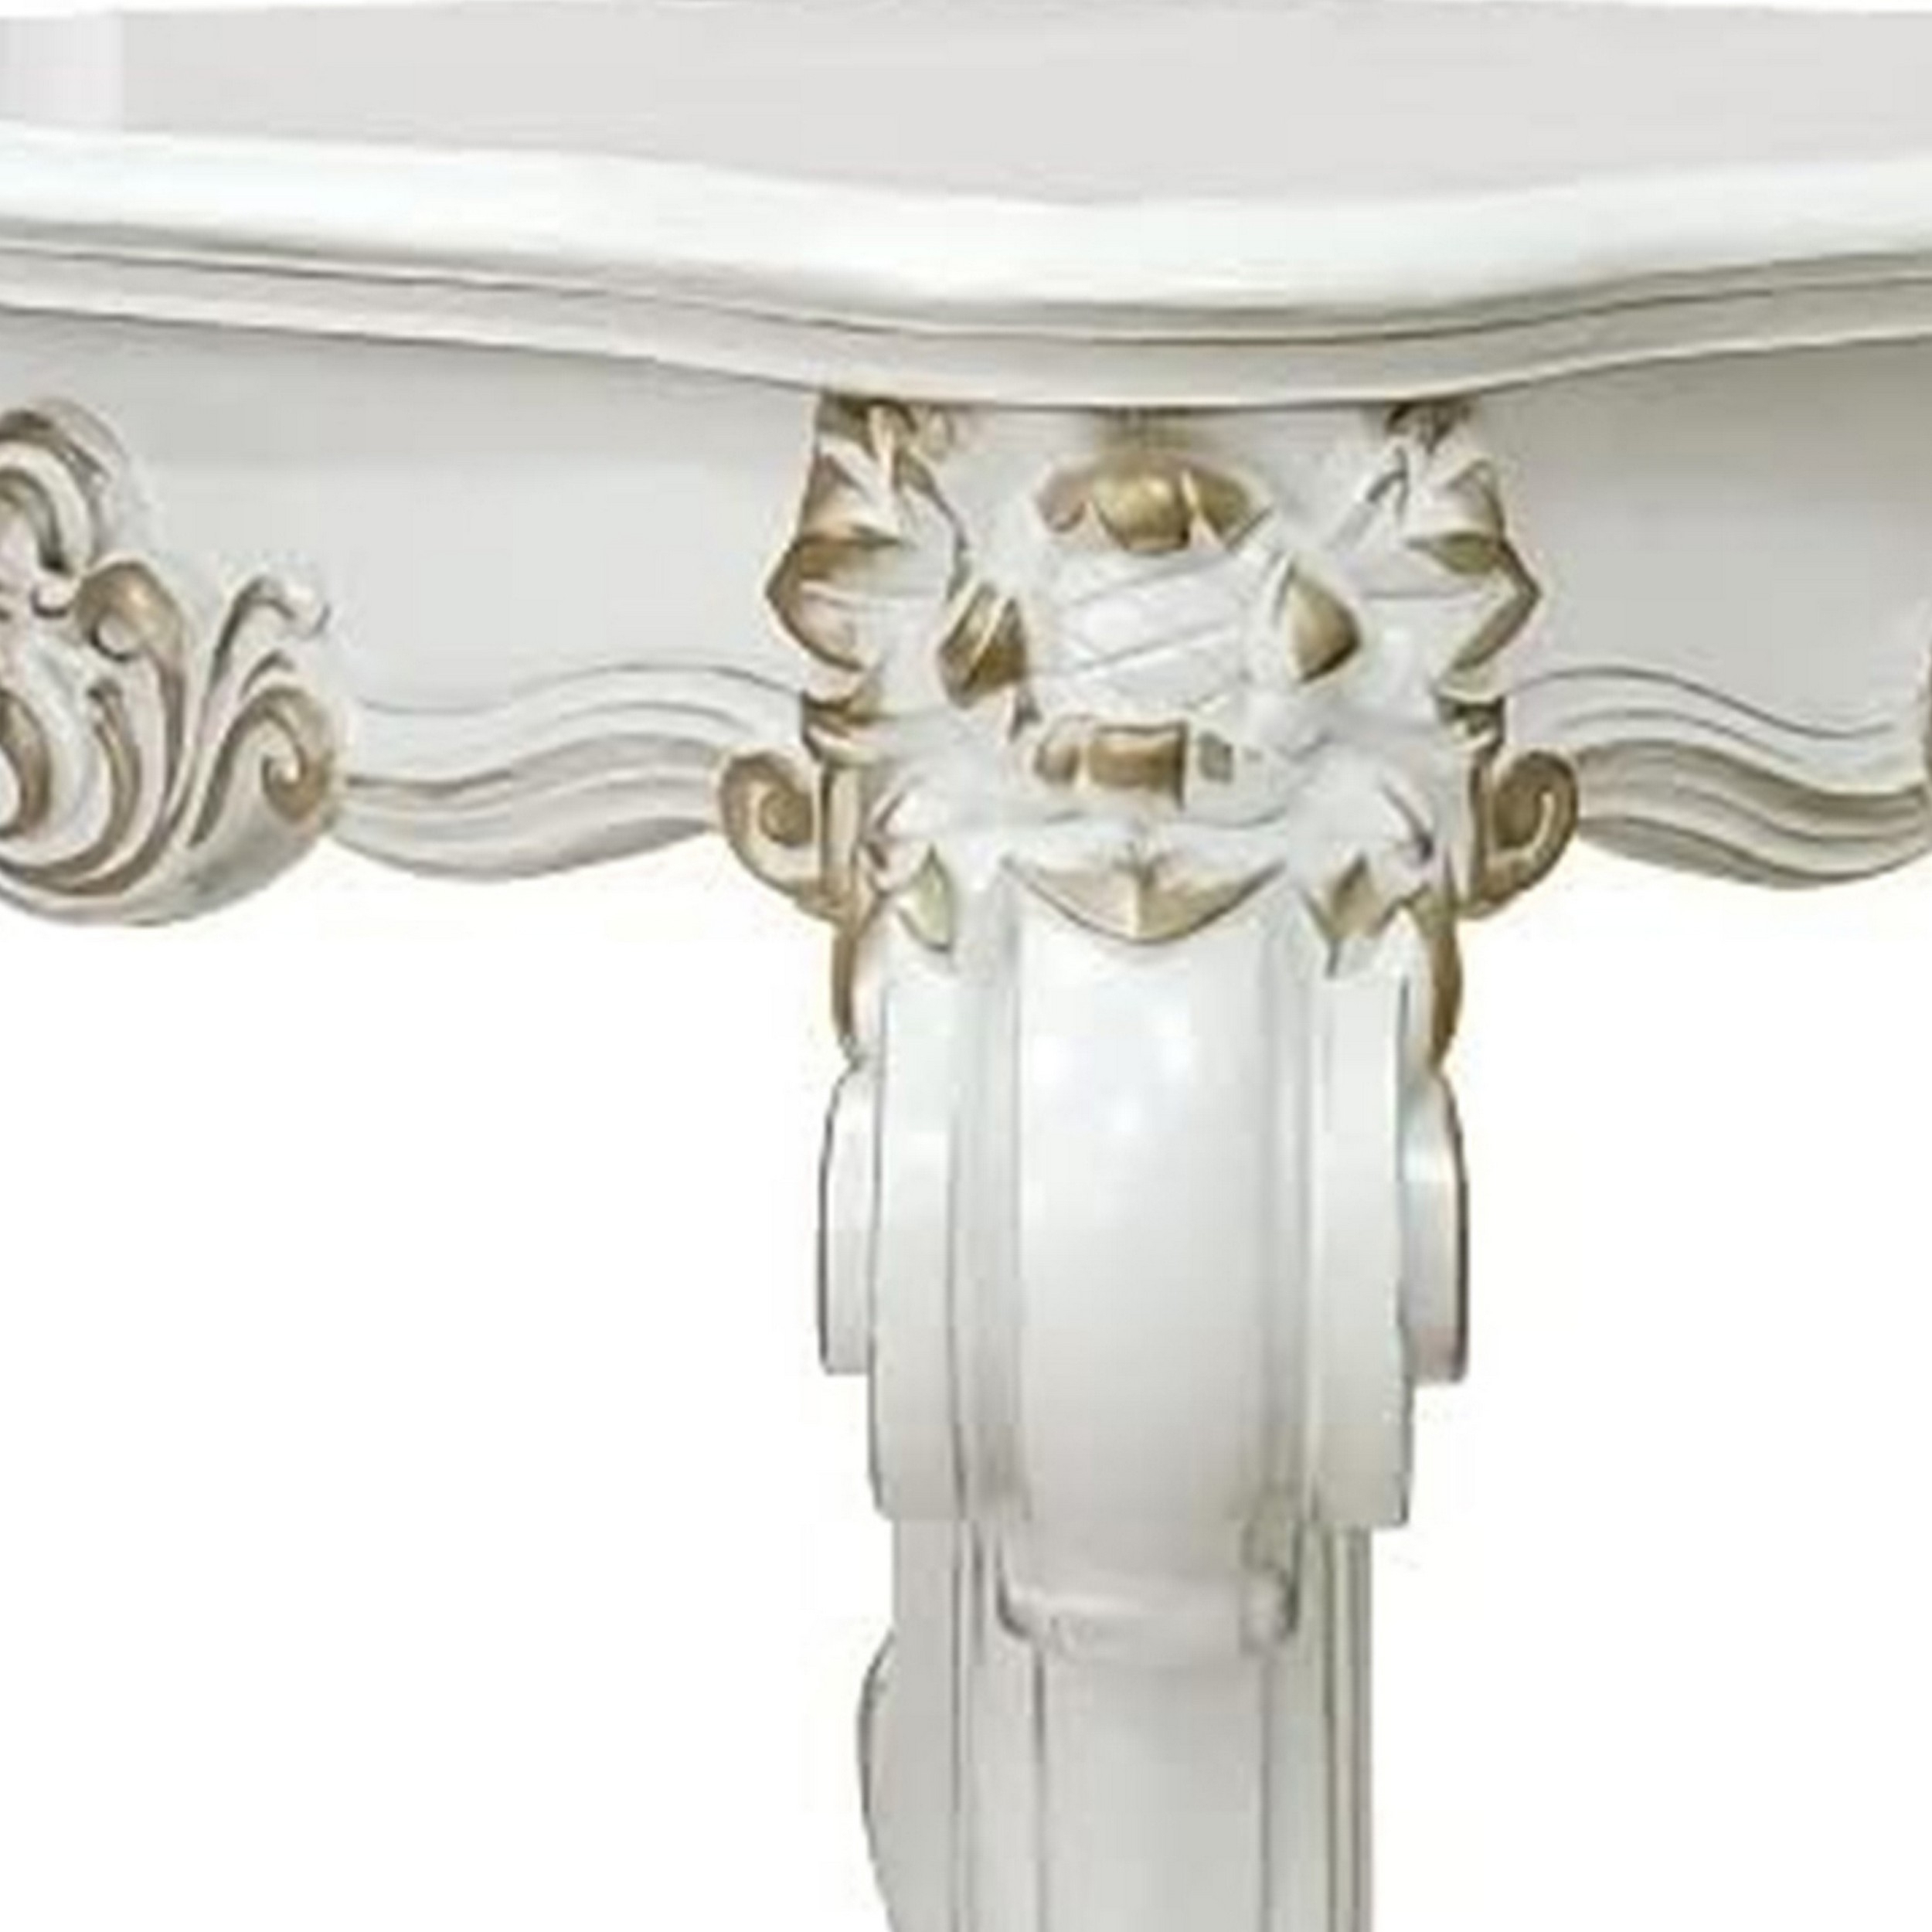 Jess 30 Inch Side End Table, Classic Scrolled Legs, 1 Shelf, Brushed Gold - Saltoro Sherpi